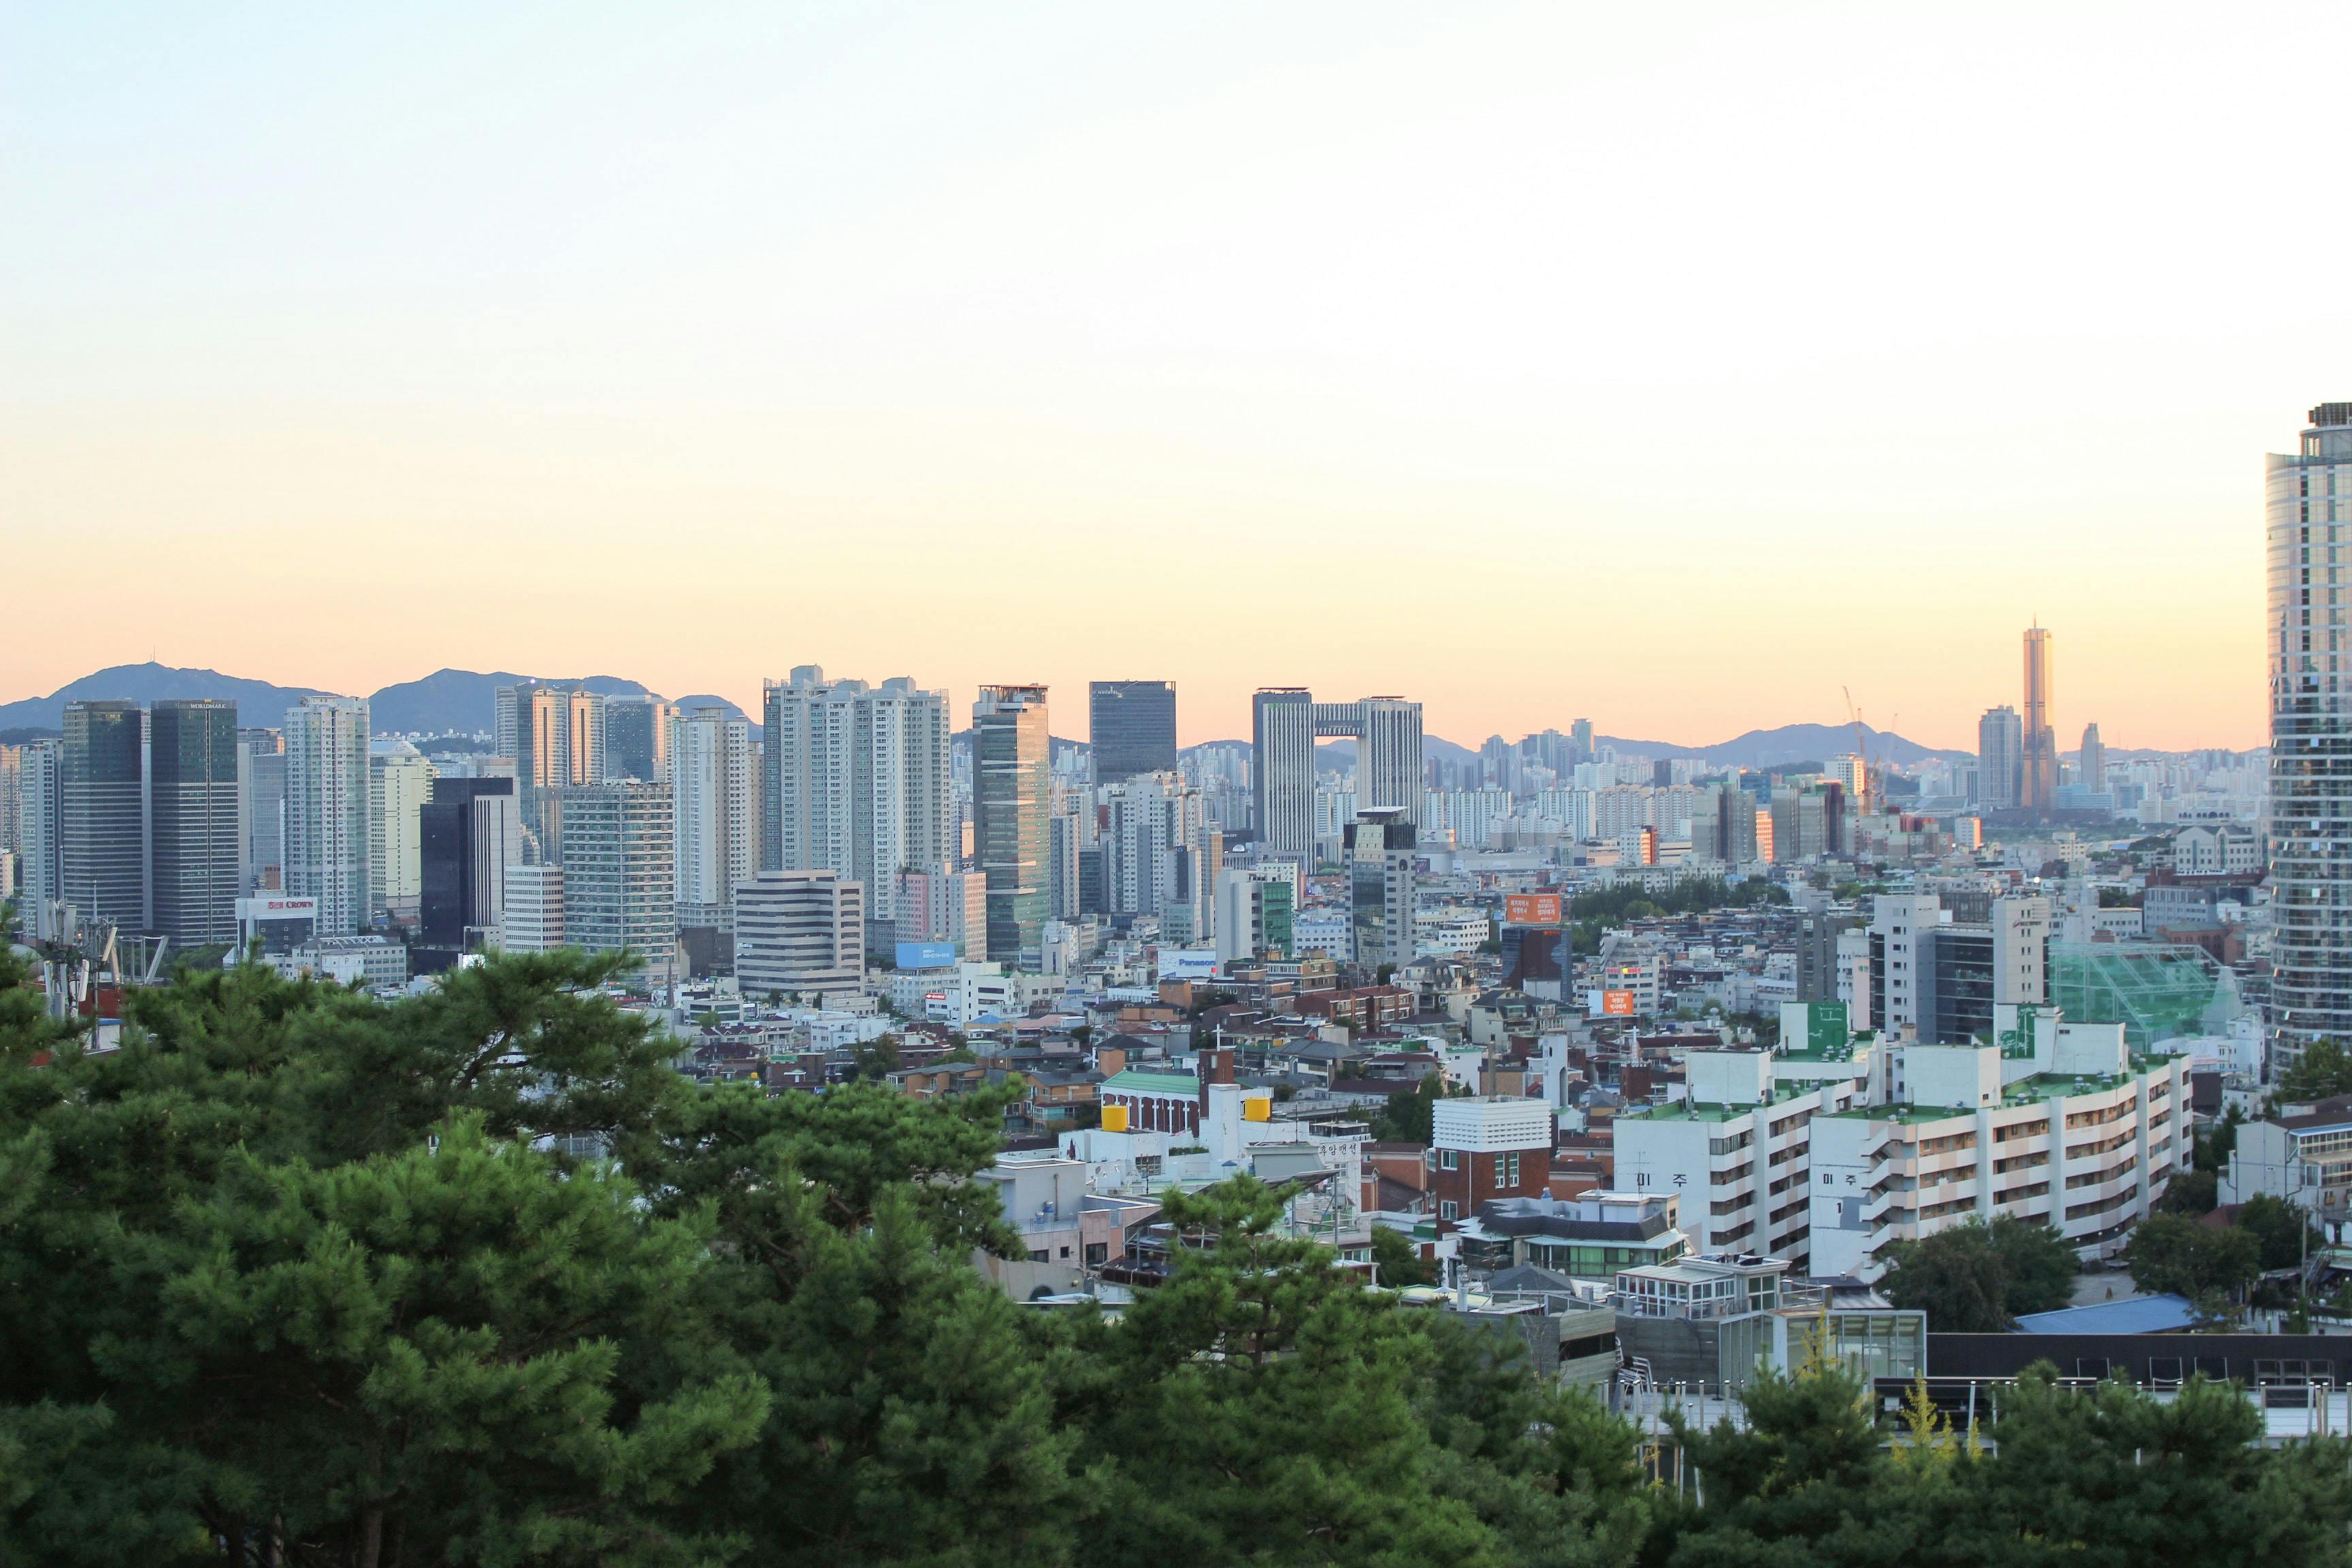 Aerial view of the Seoul, South Korea skyline